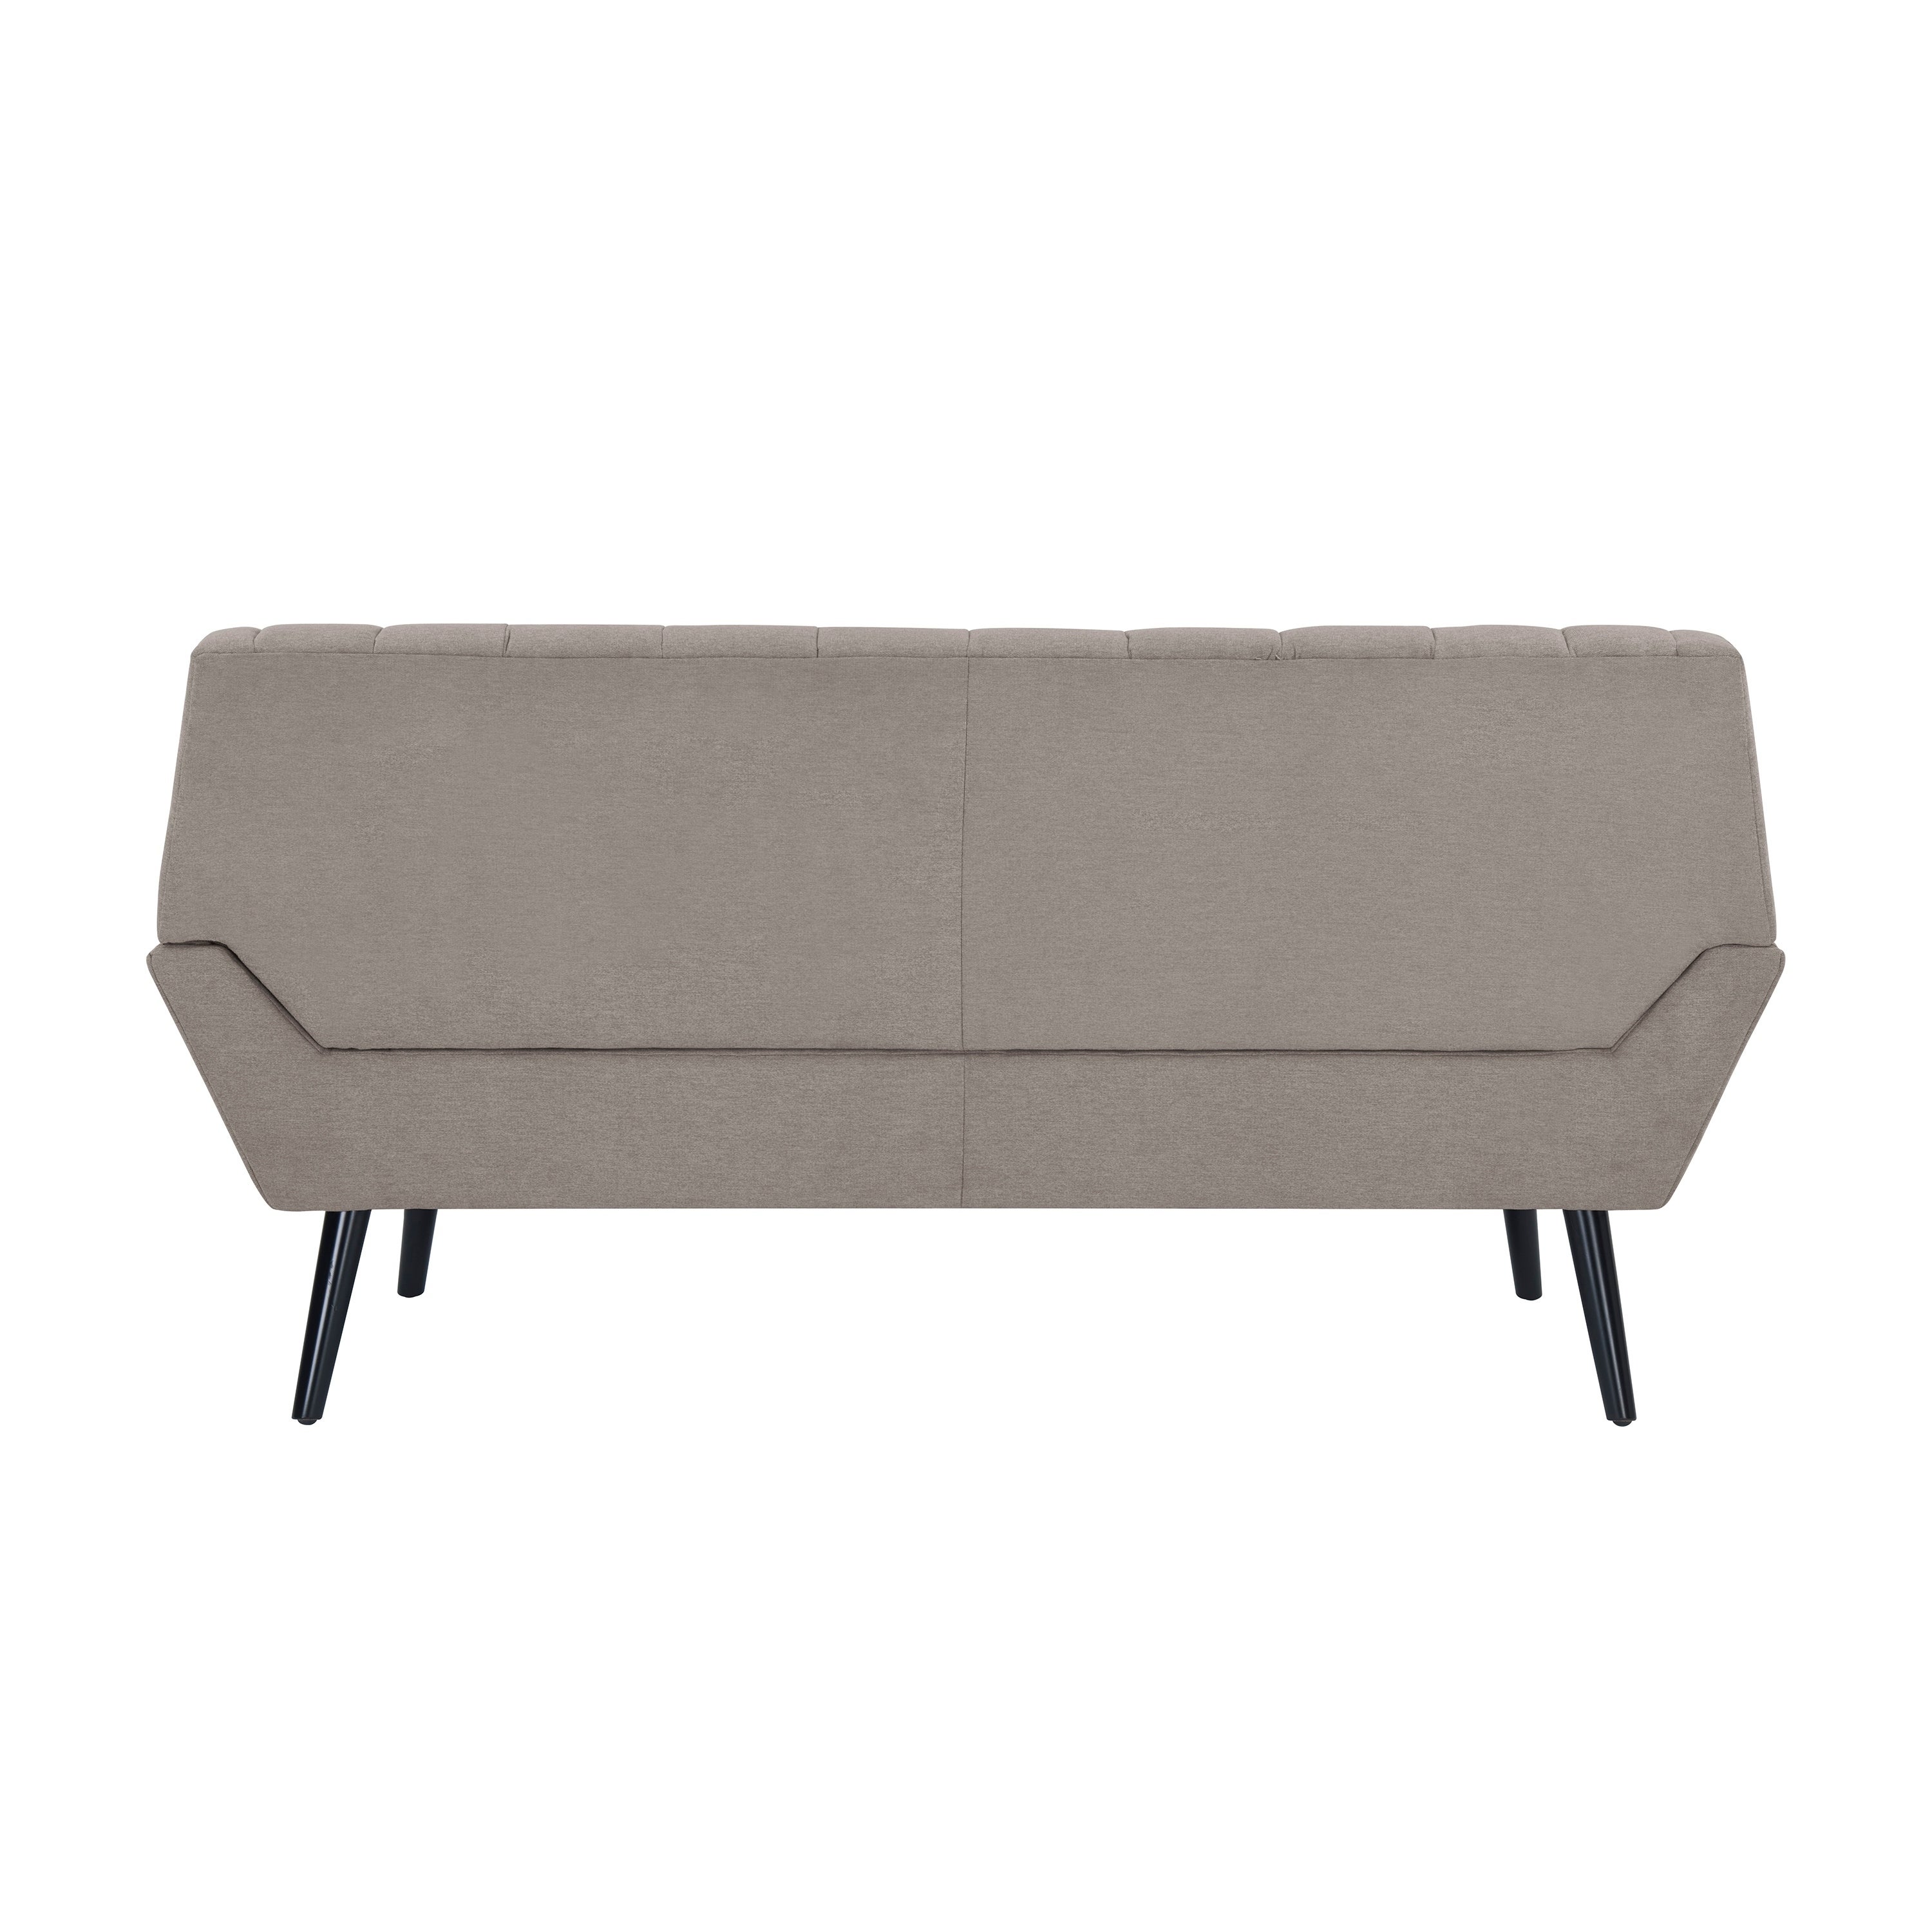 100days Kingbird Furniture Company Brand Green Sectional Sofa Manufacture 11